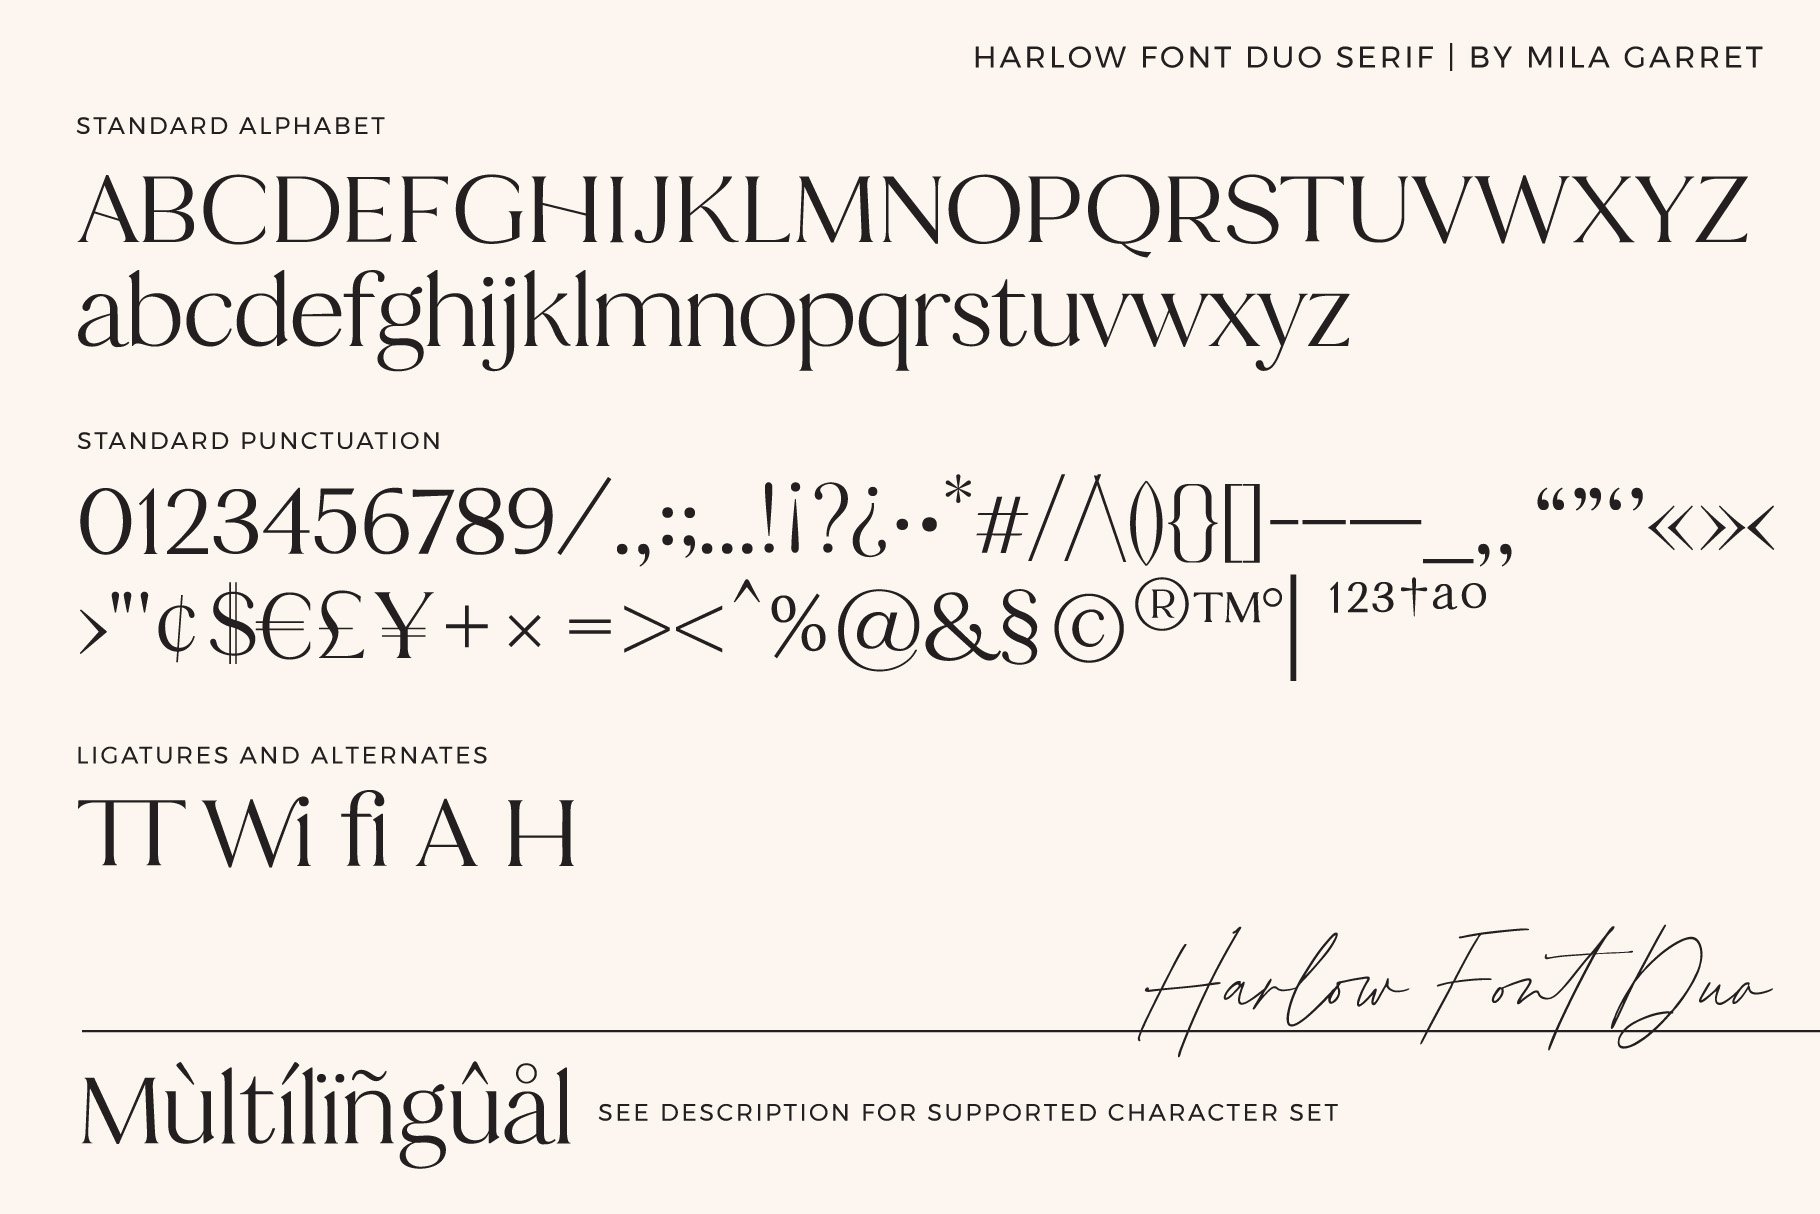 serif specimen font duo serif script pairing elegant handwritten clean simple minimalist branding websites harlow font duo mila garret 891